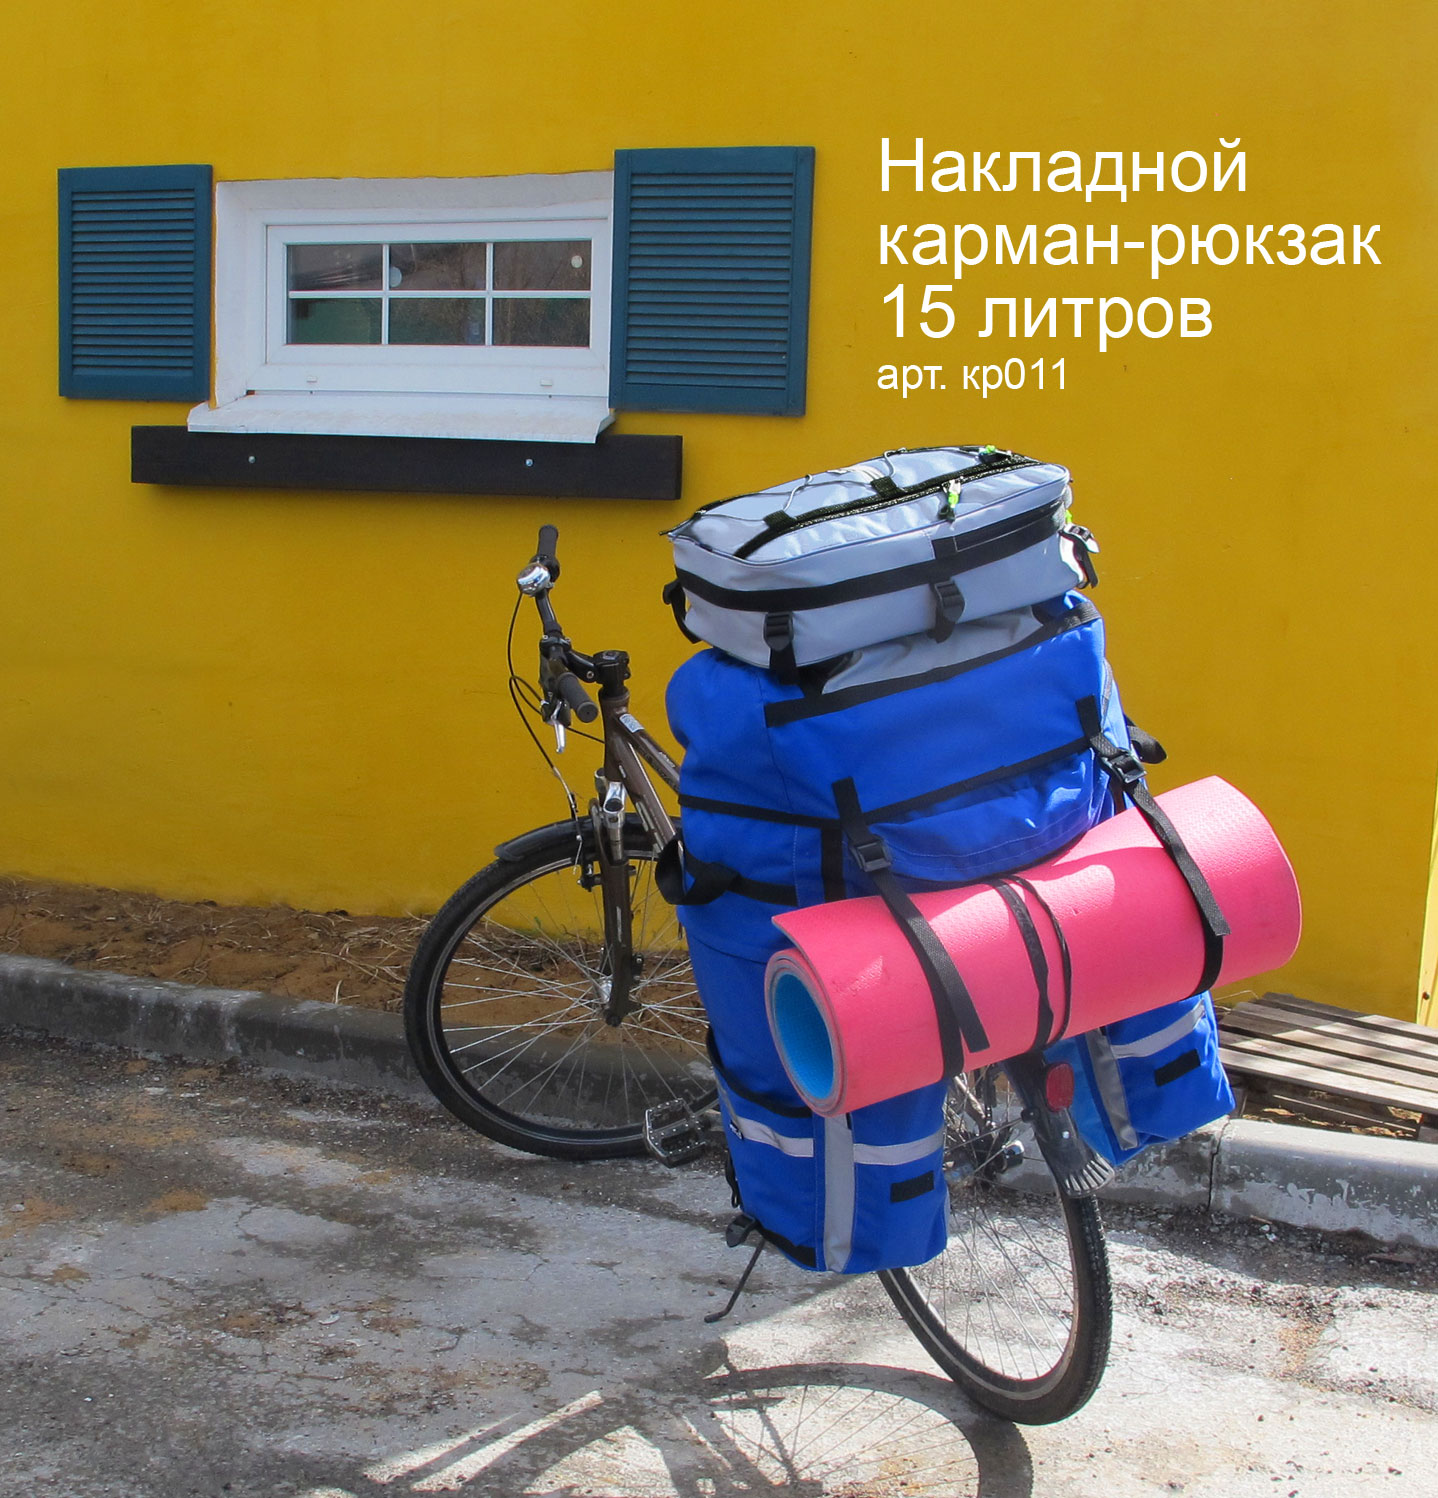 Накладной карман-рюкзак (товар-спутник) 15 литров